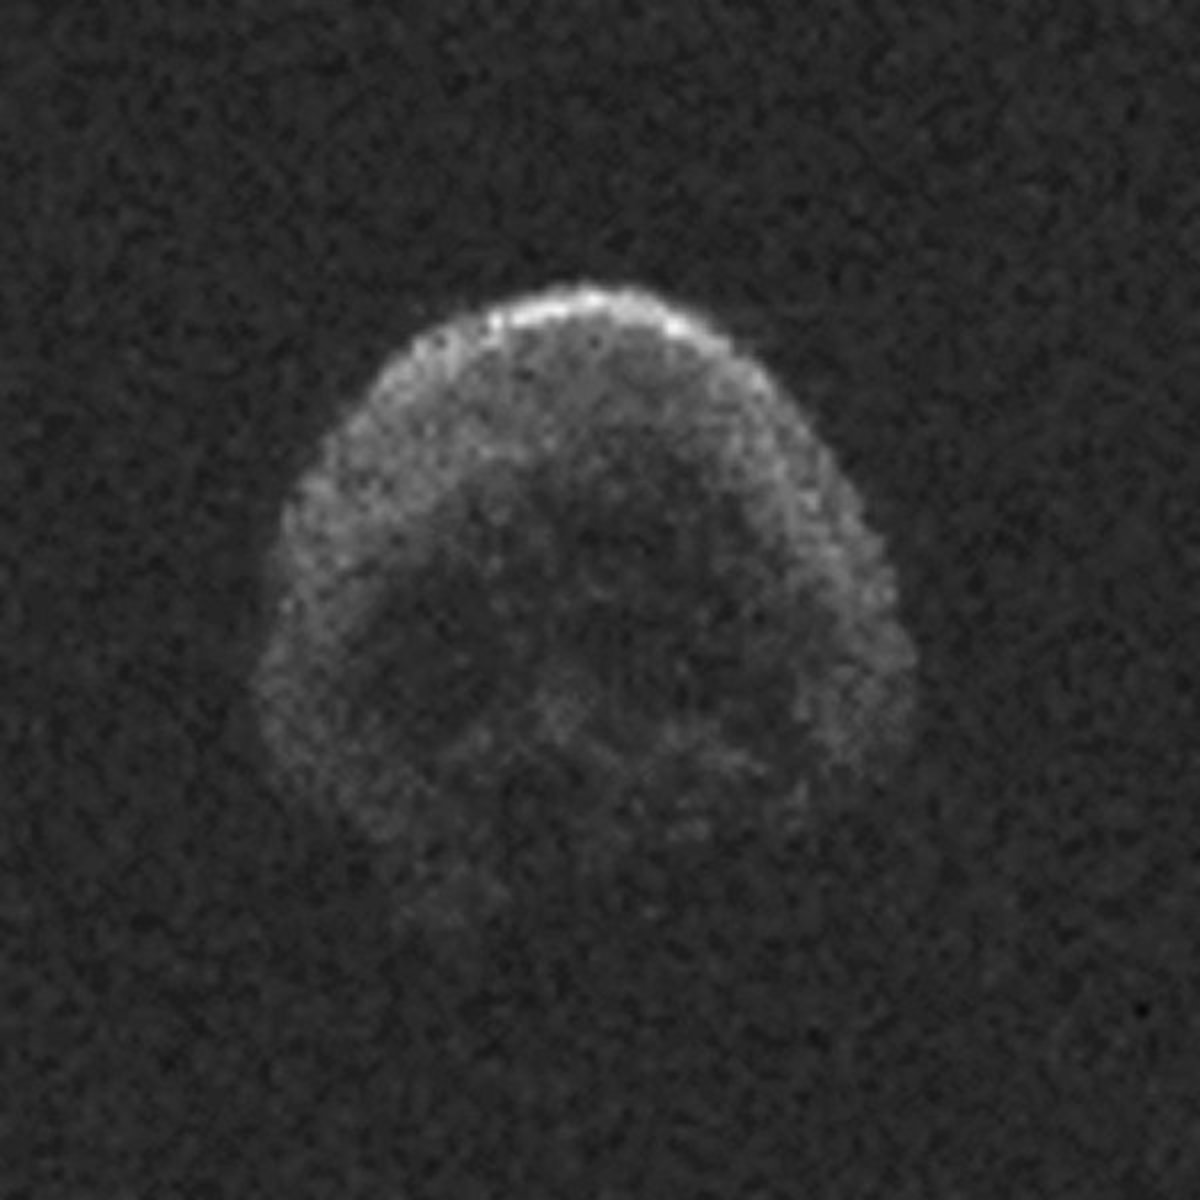 NASA: Δημοσιοποίησε φωτογραφία κομήτη που μοιάζει με νεκροκεφαλή, ανήμερα του Halloween!